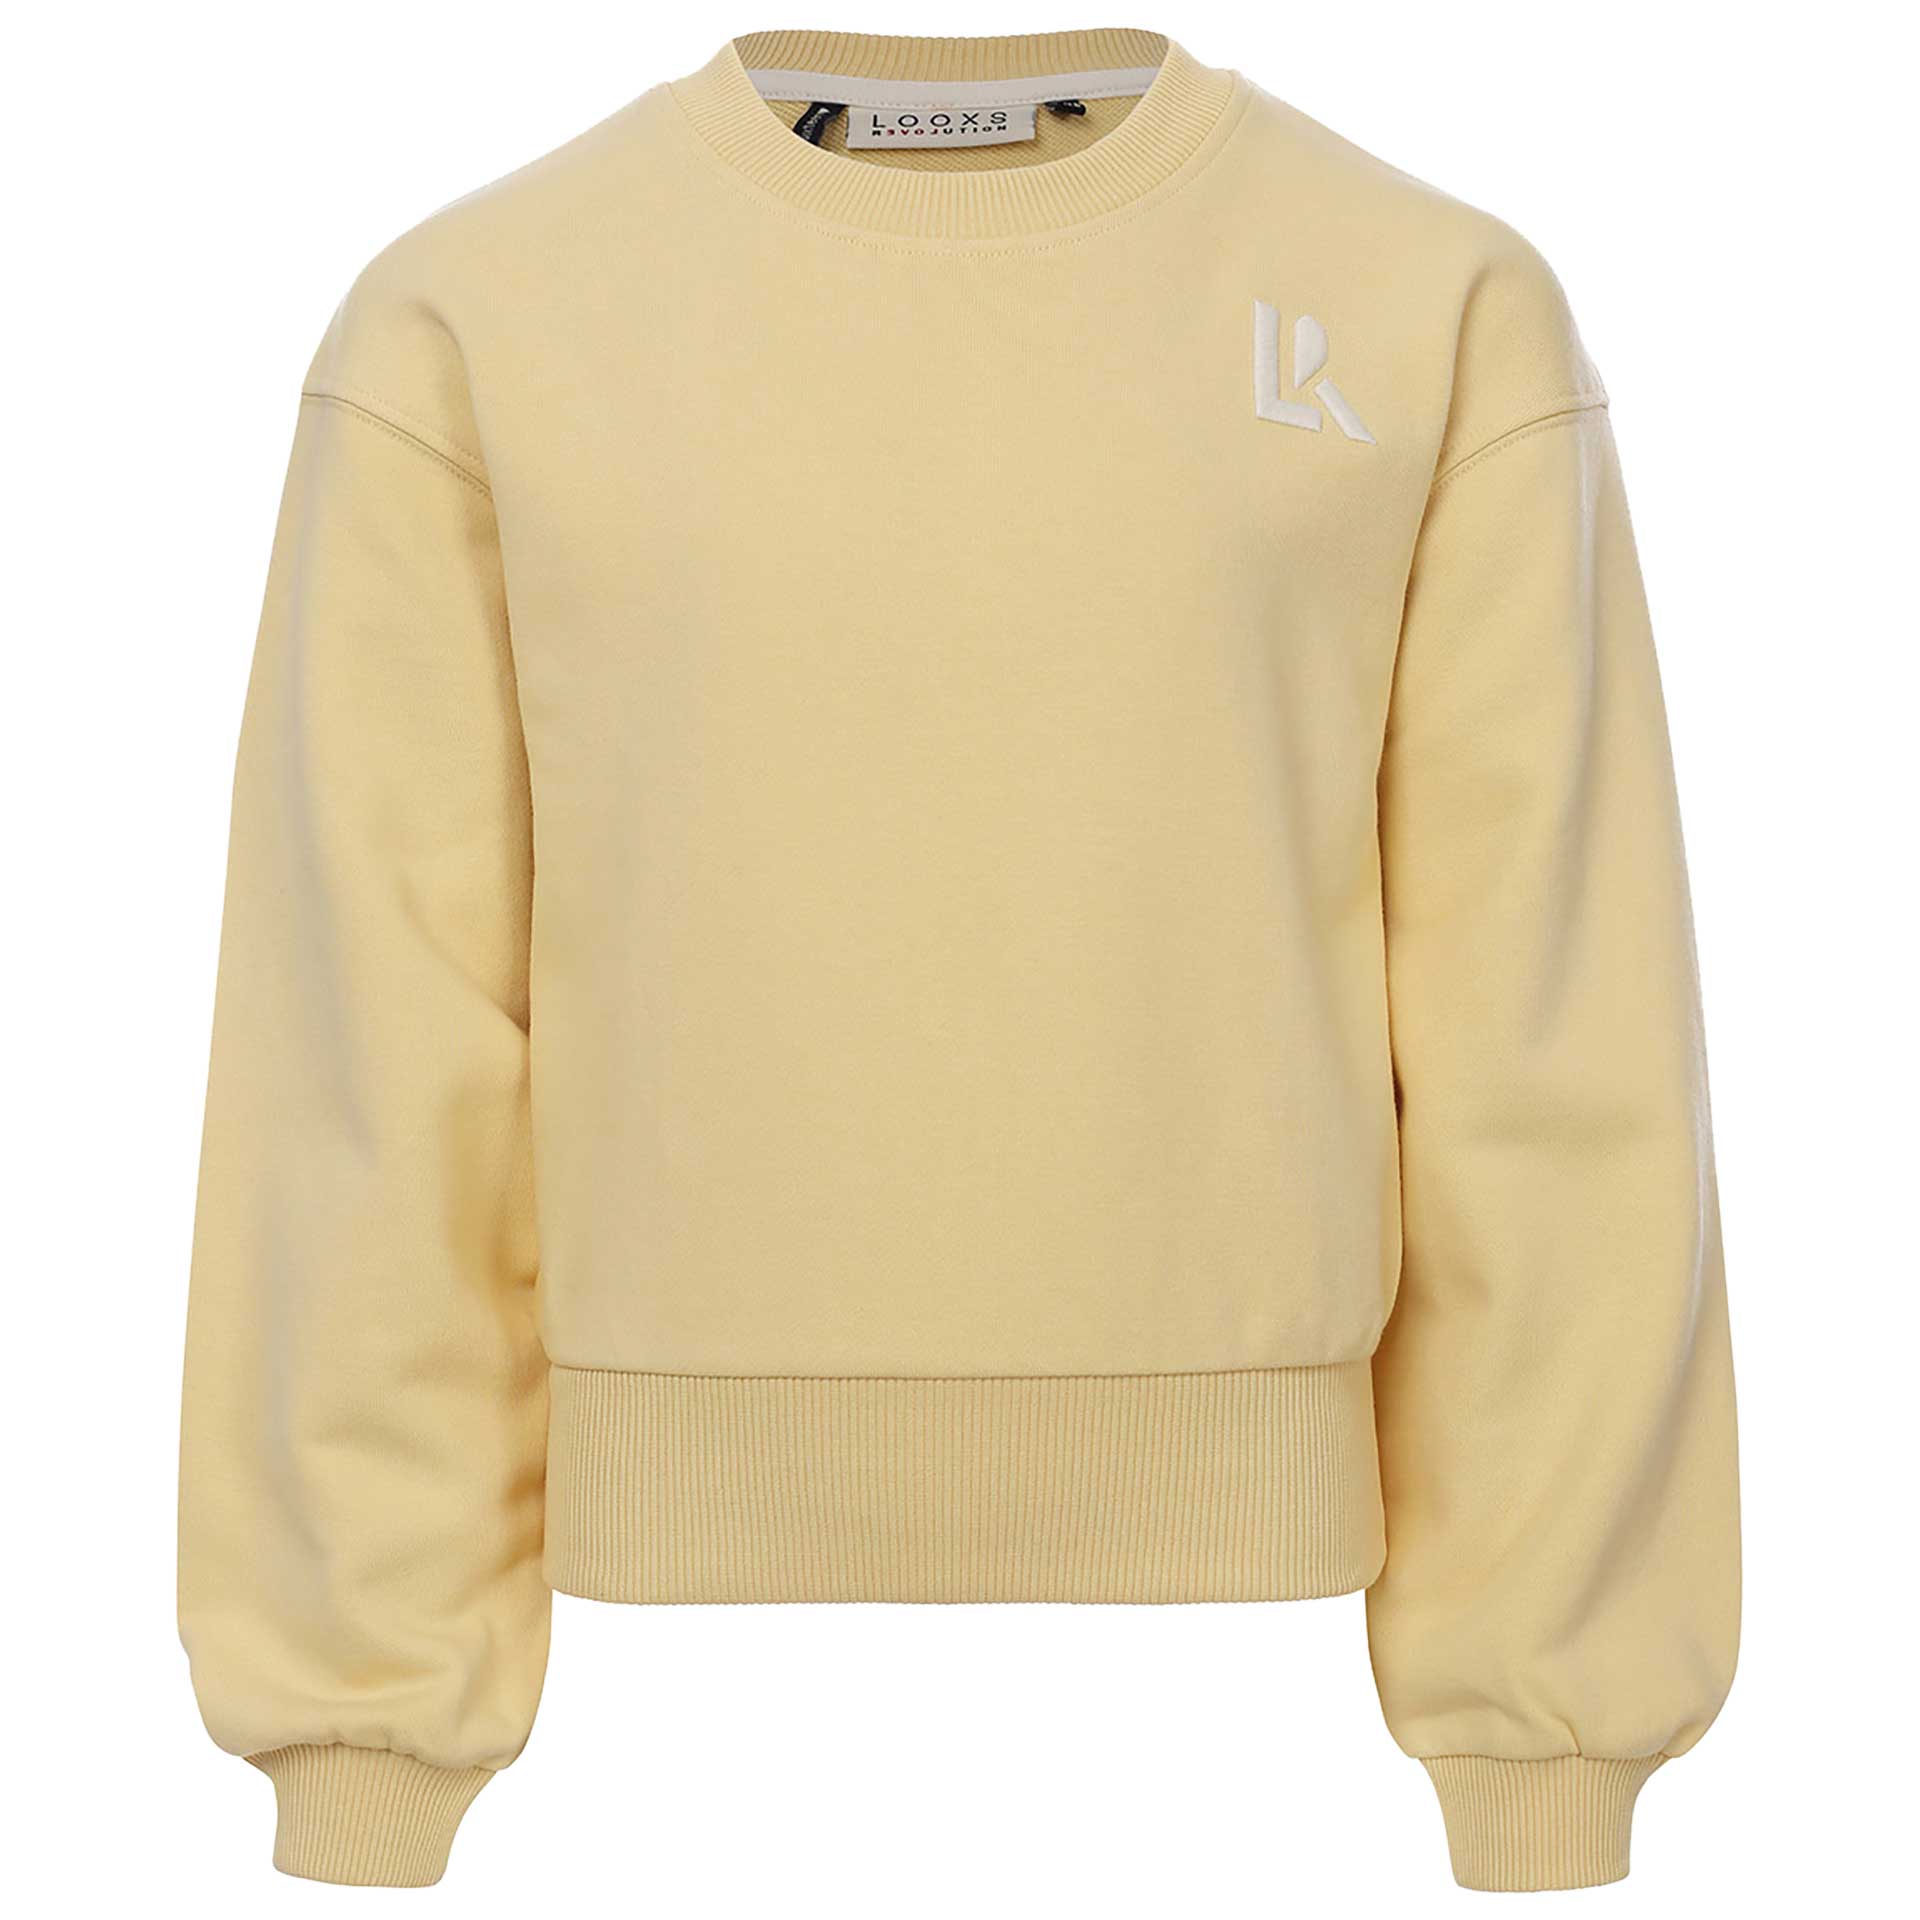 Looxs Sweater 1